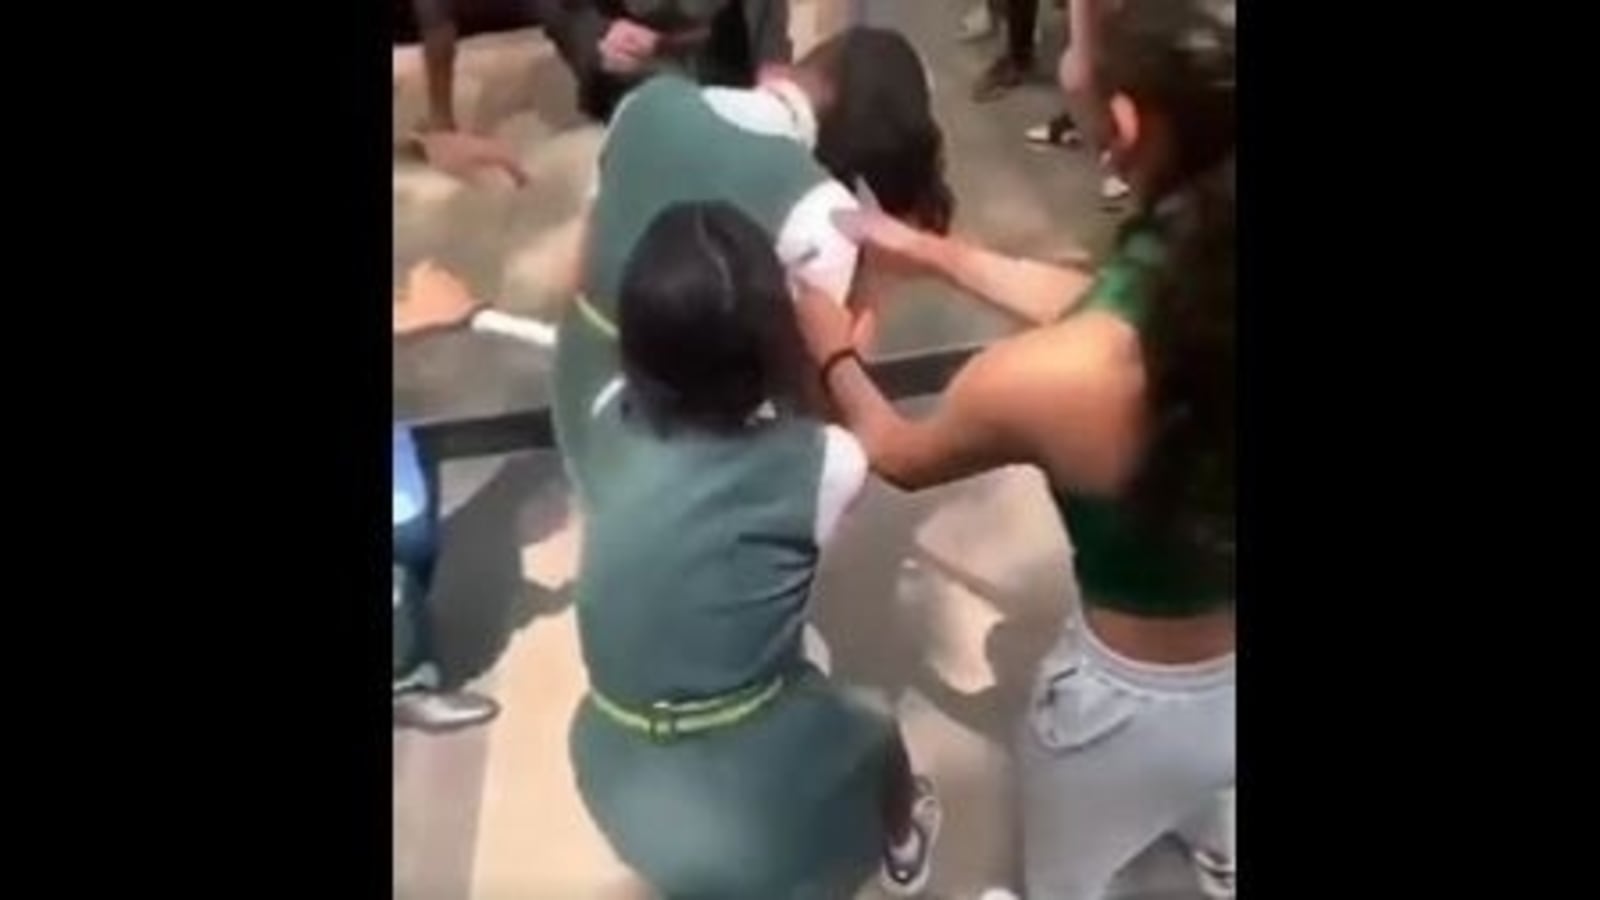 Local Xxxii Videos - Video of Bengaluru girls fighting on street in school uniform emerges |  Latest News India - Hindustan Times